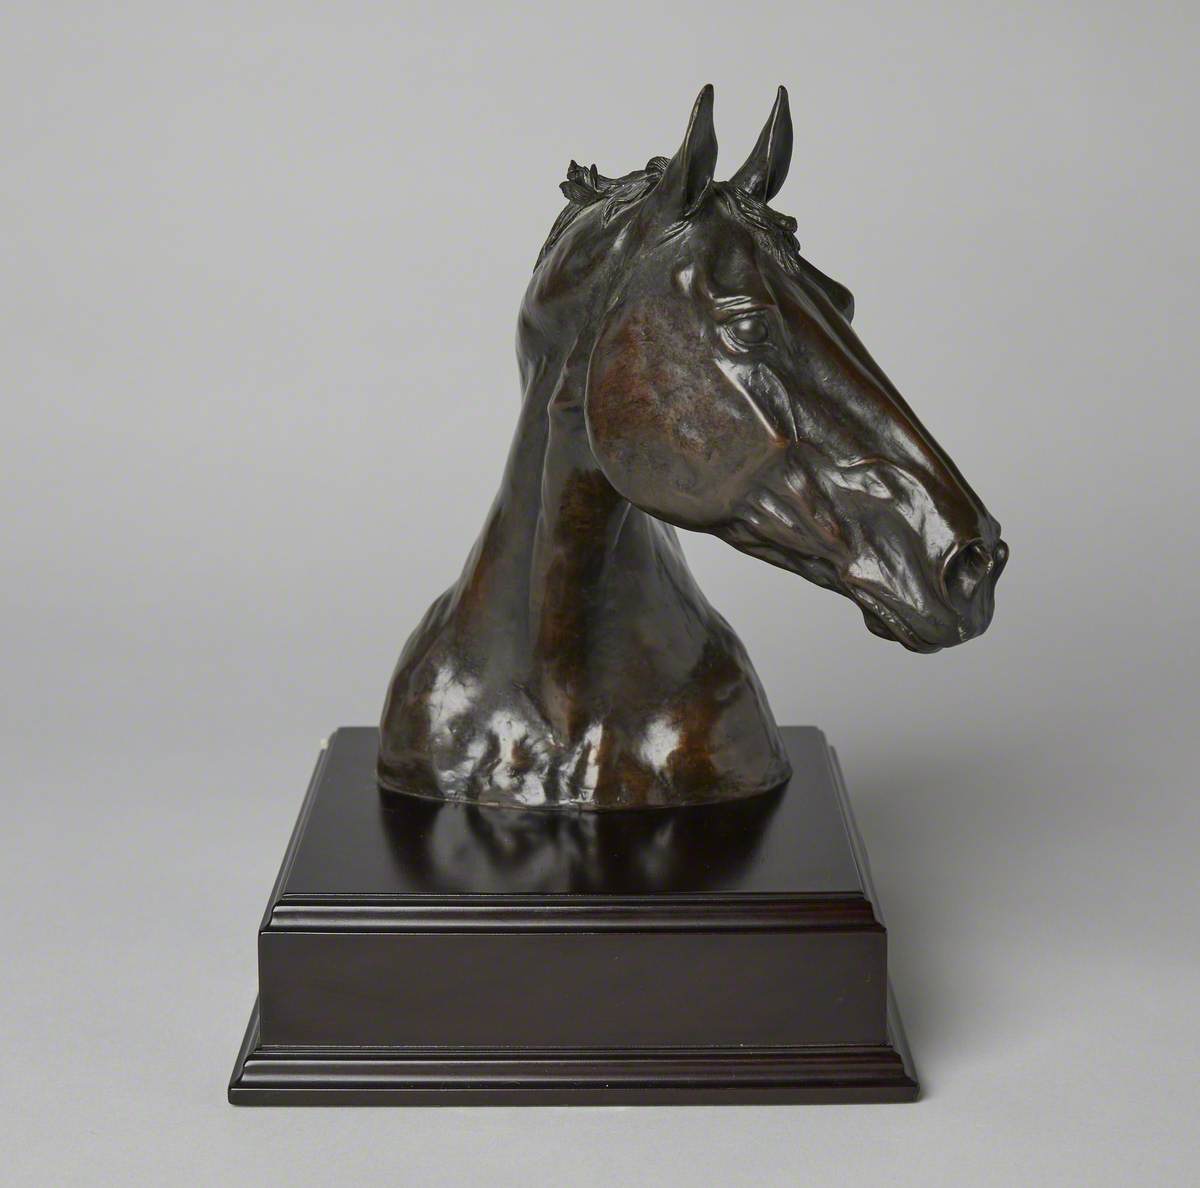 Bust of Sir Wattie, the Scott Family Racehorse